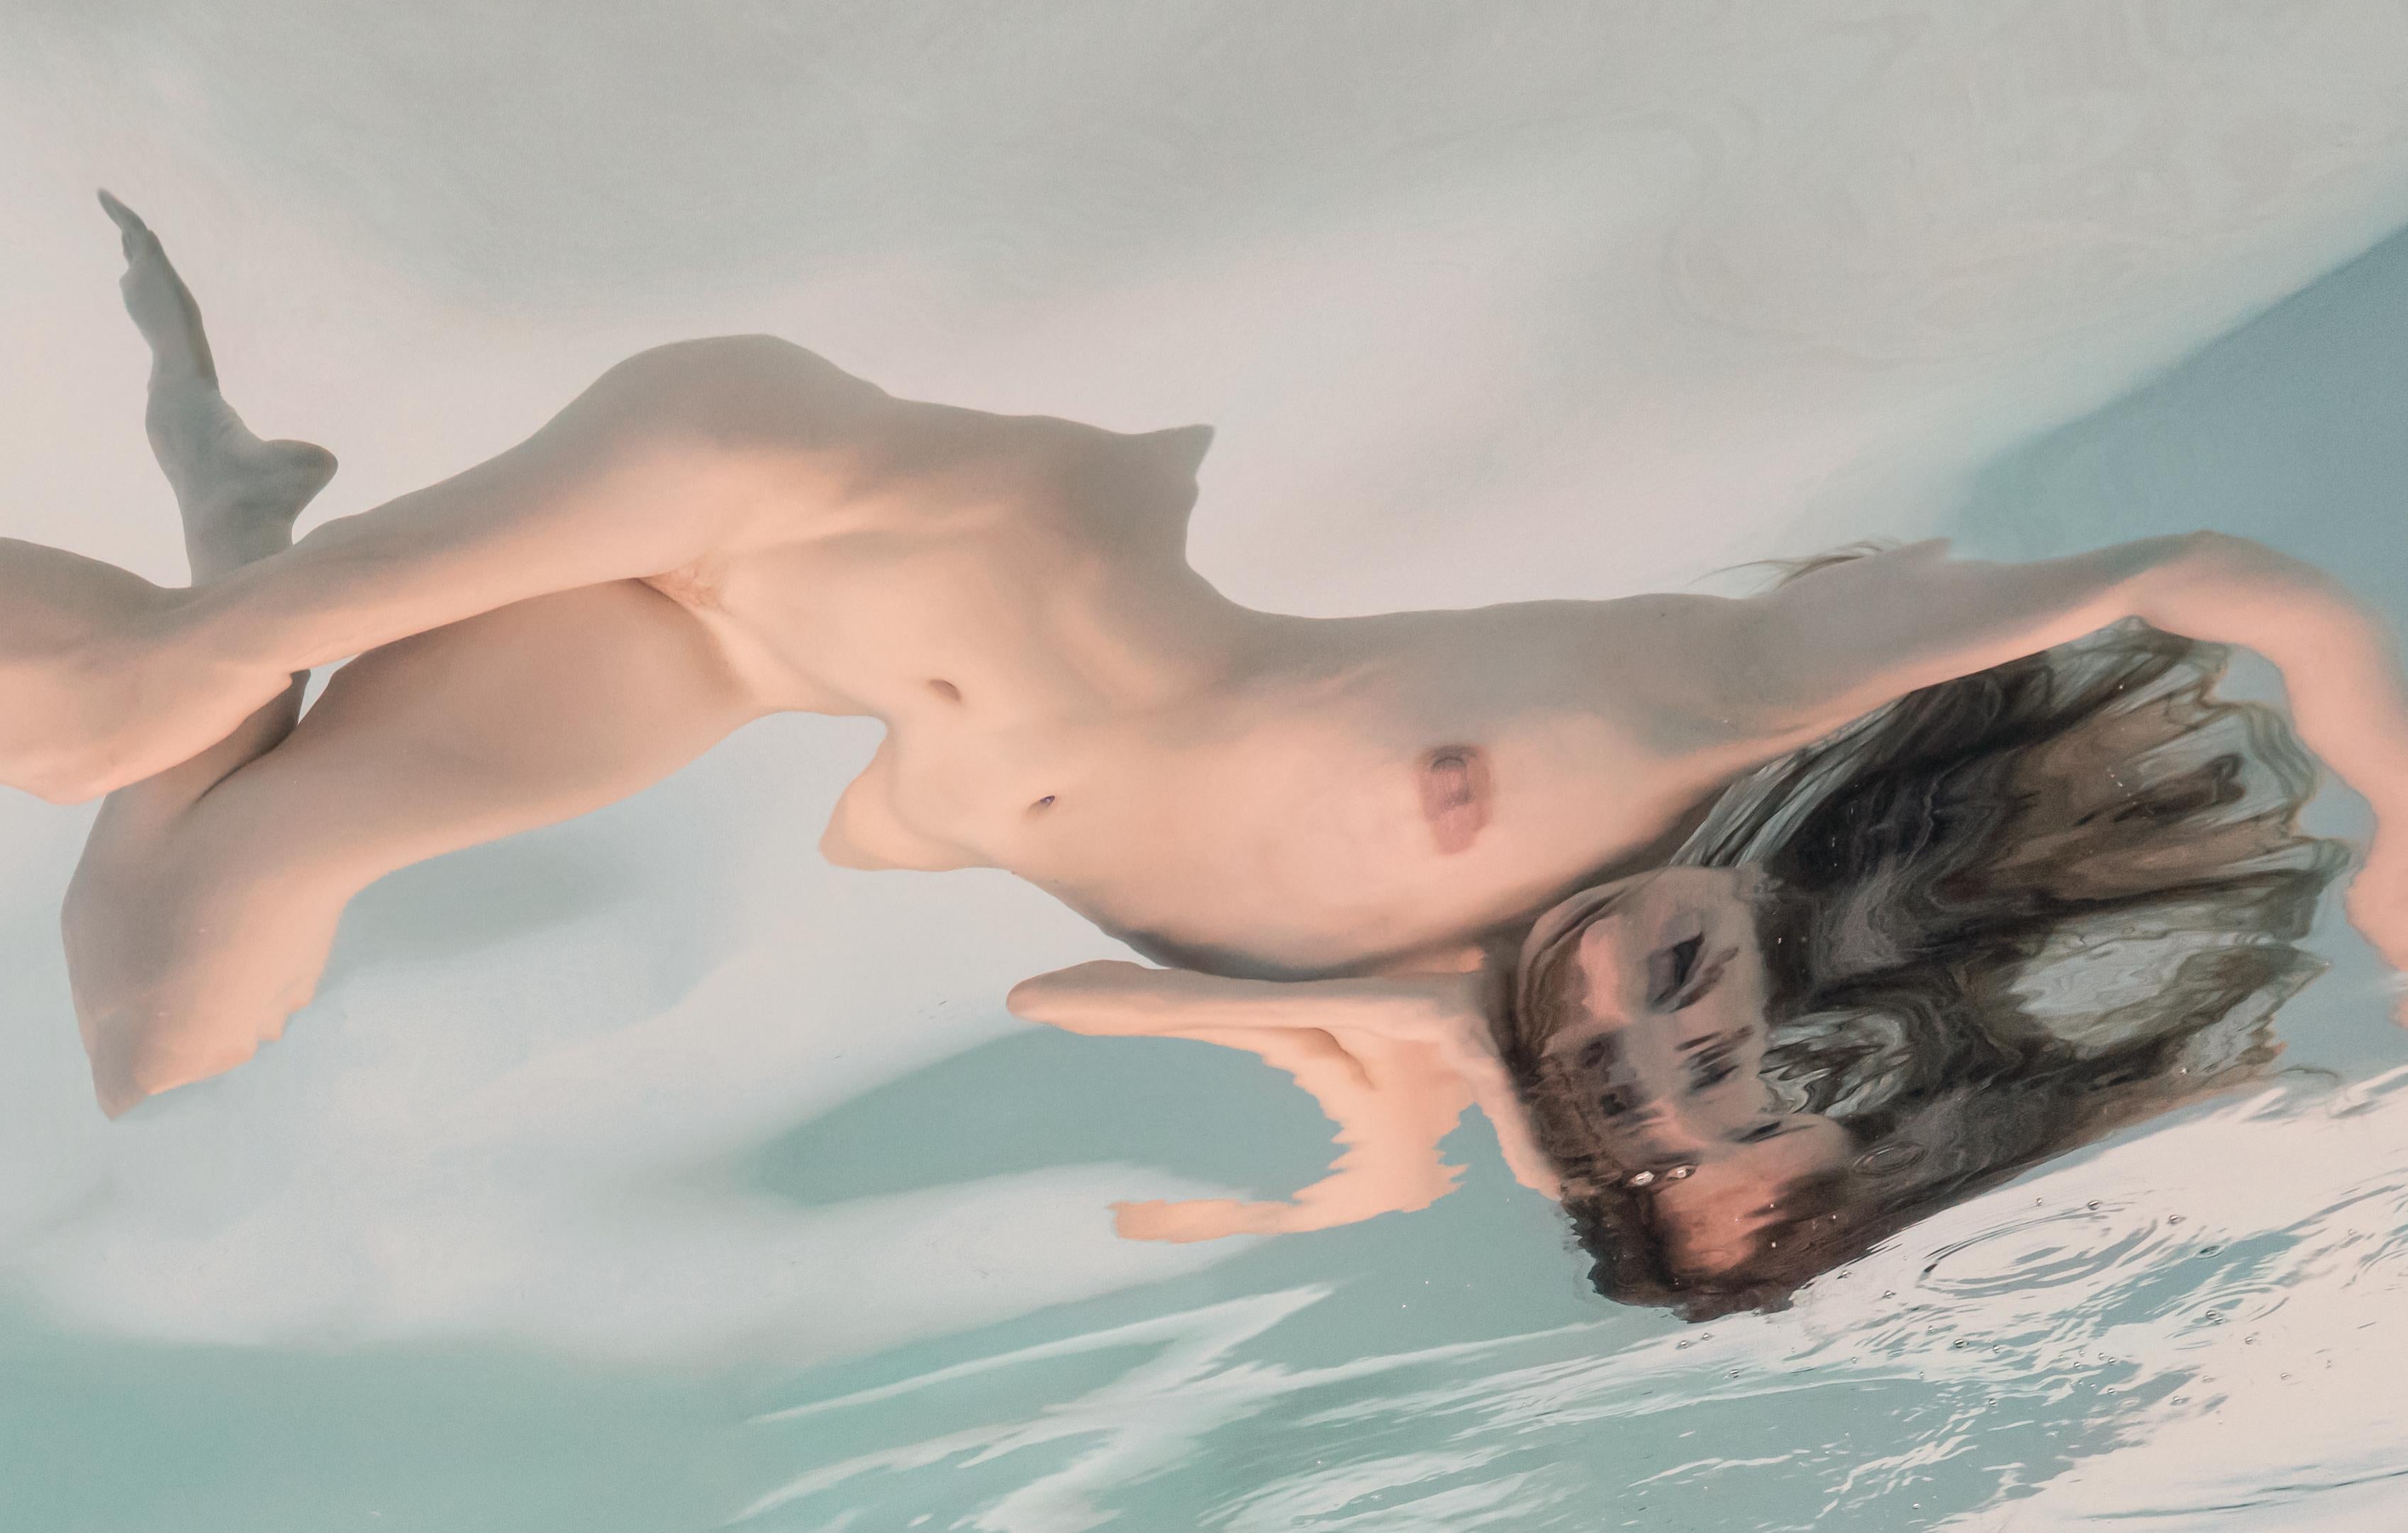 Zero Gravity Lounge III - underwater nude photograph - archival pigment 25x35